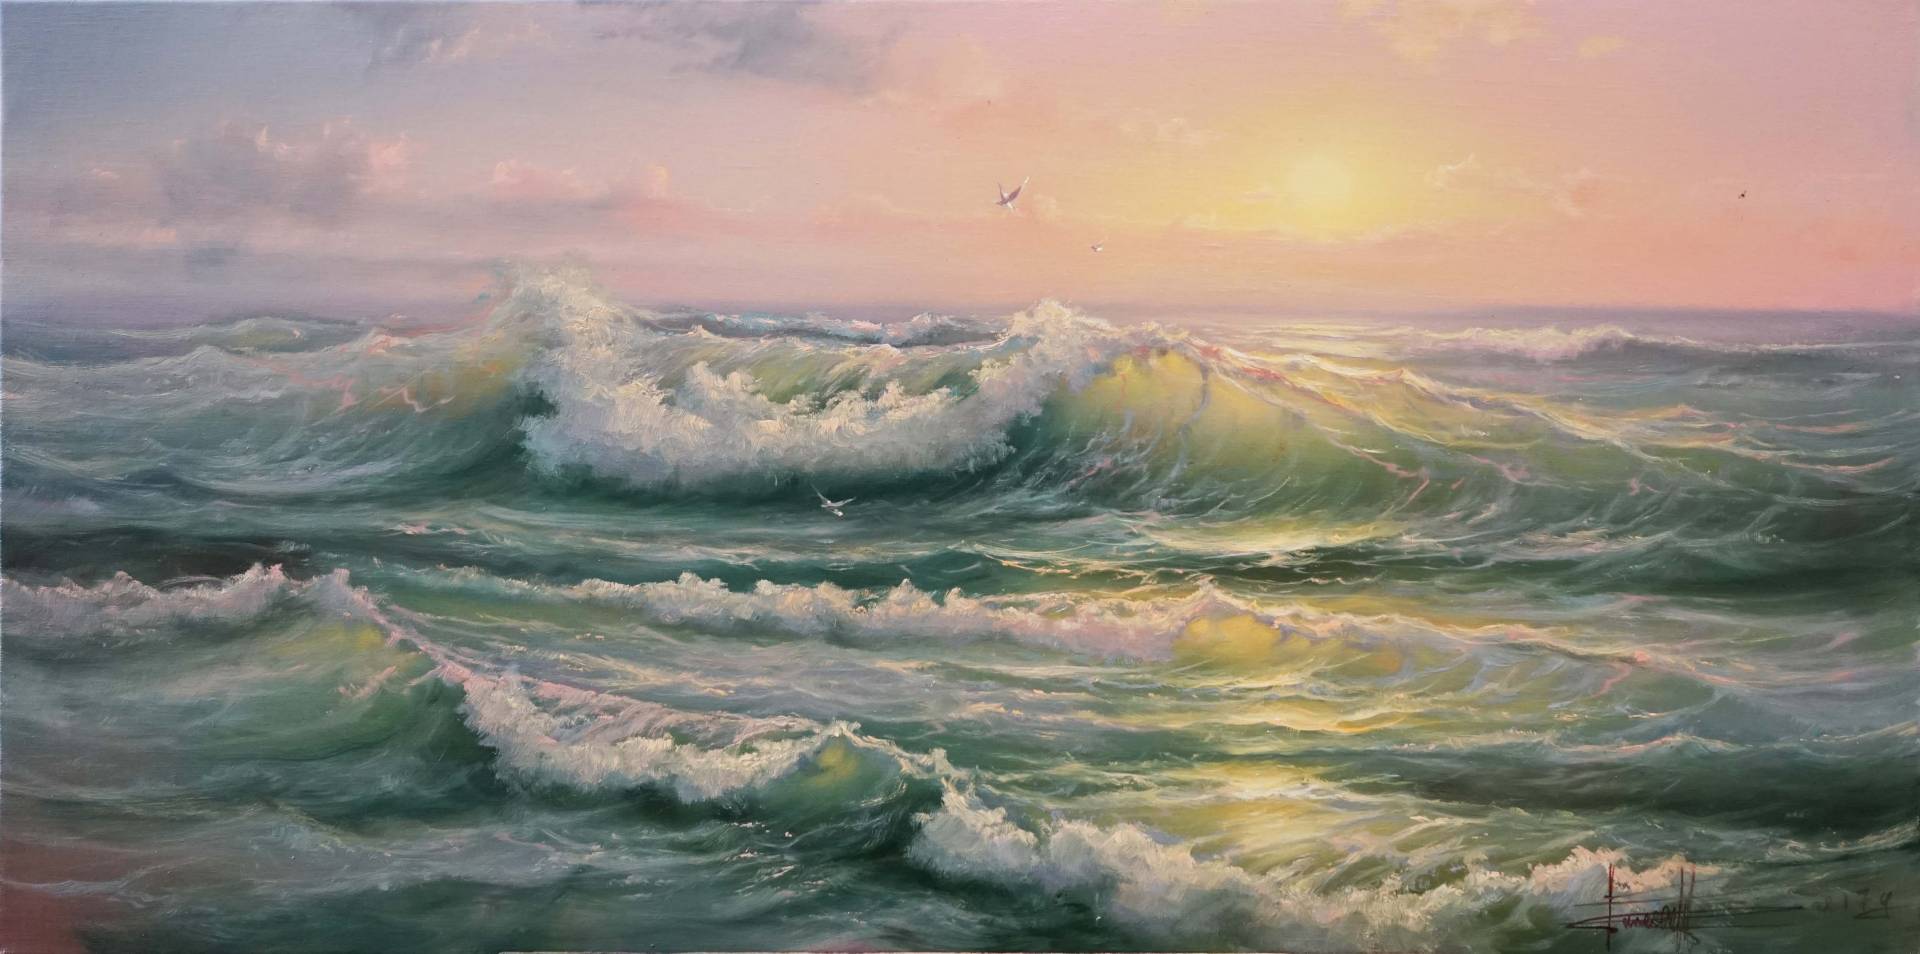 On the sea - 1, Dmitry Balakhonov, Buy the painting Oil